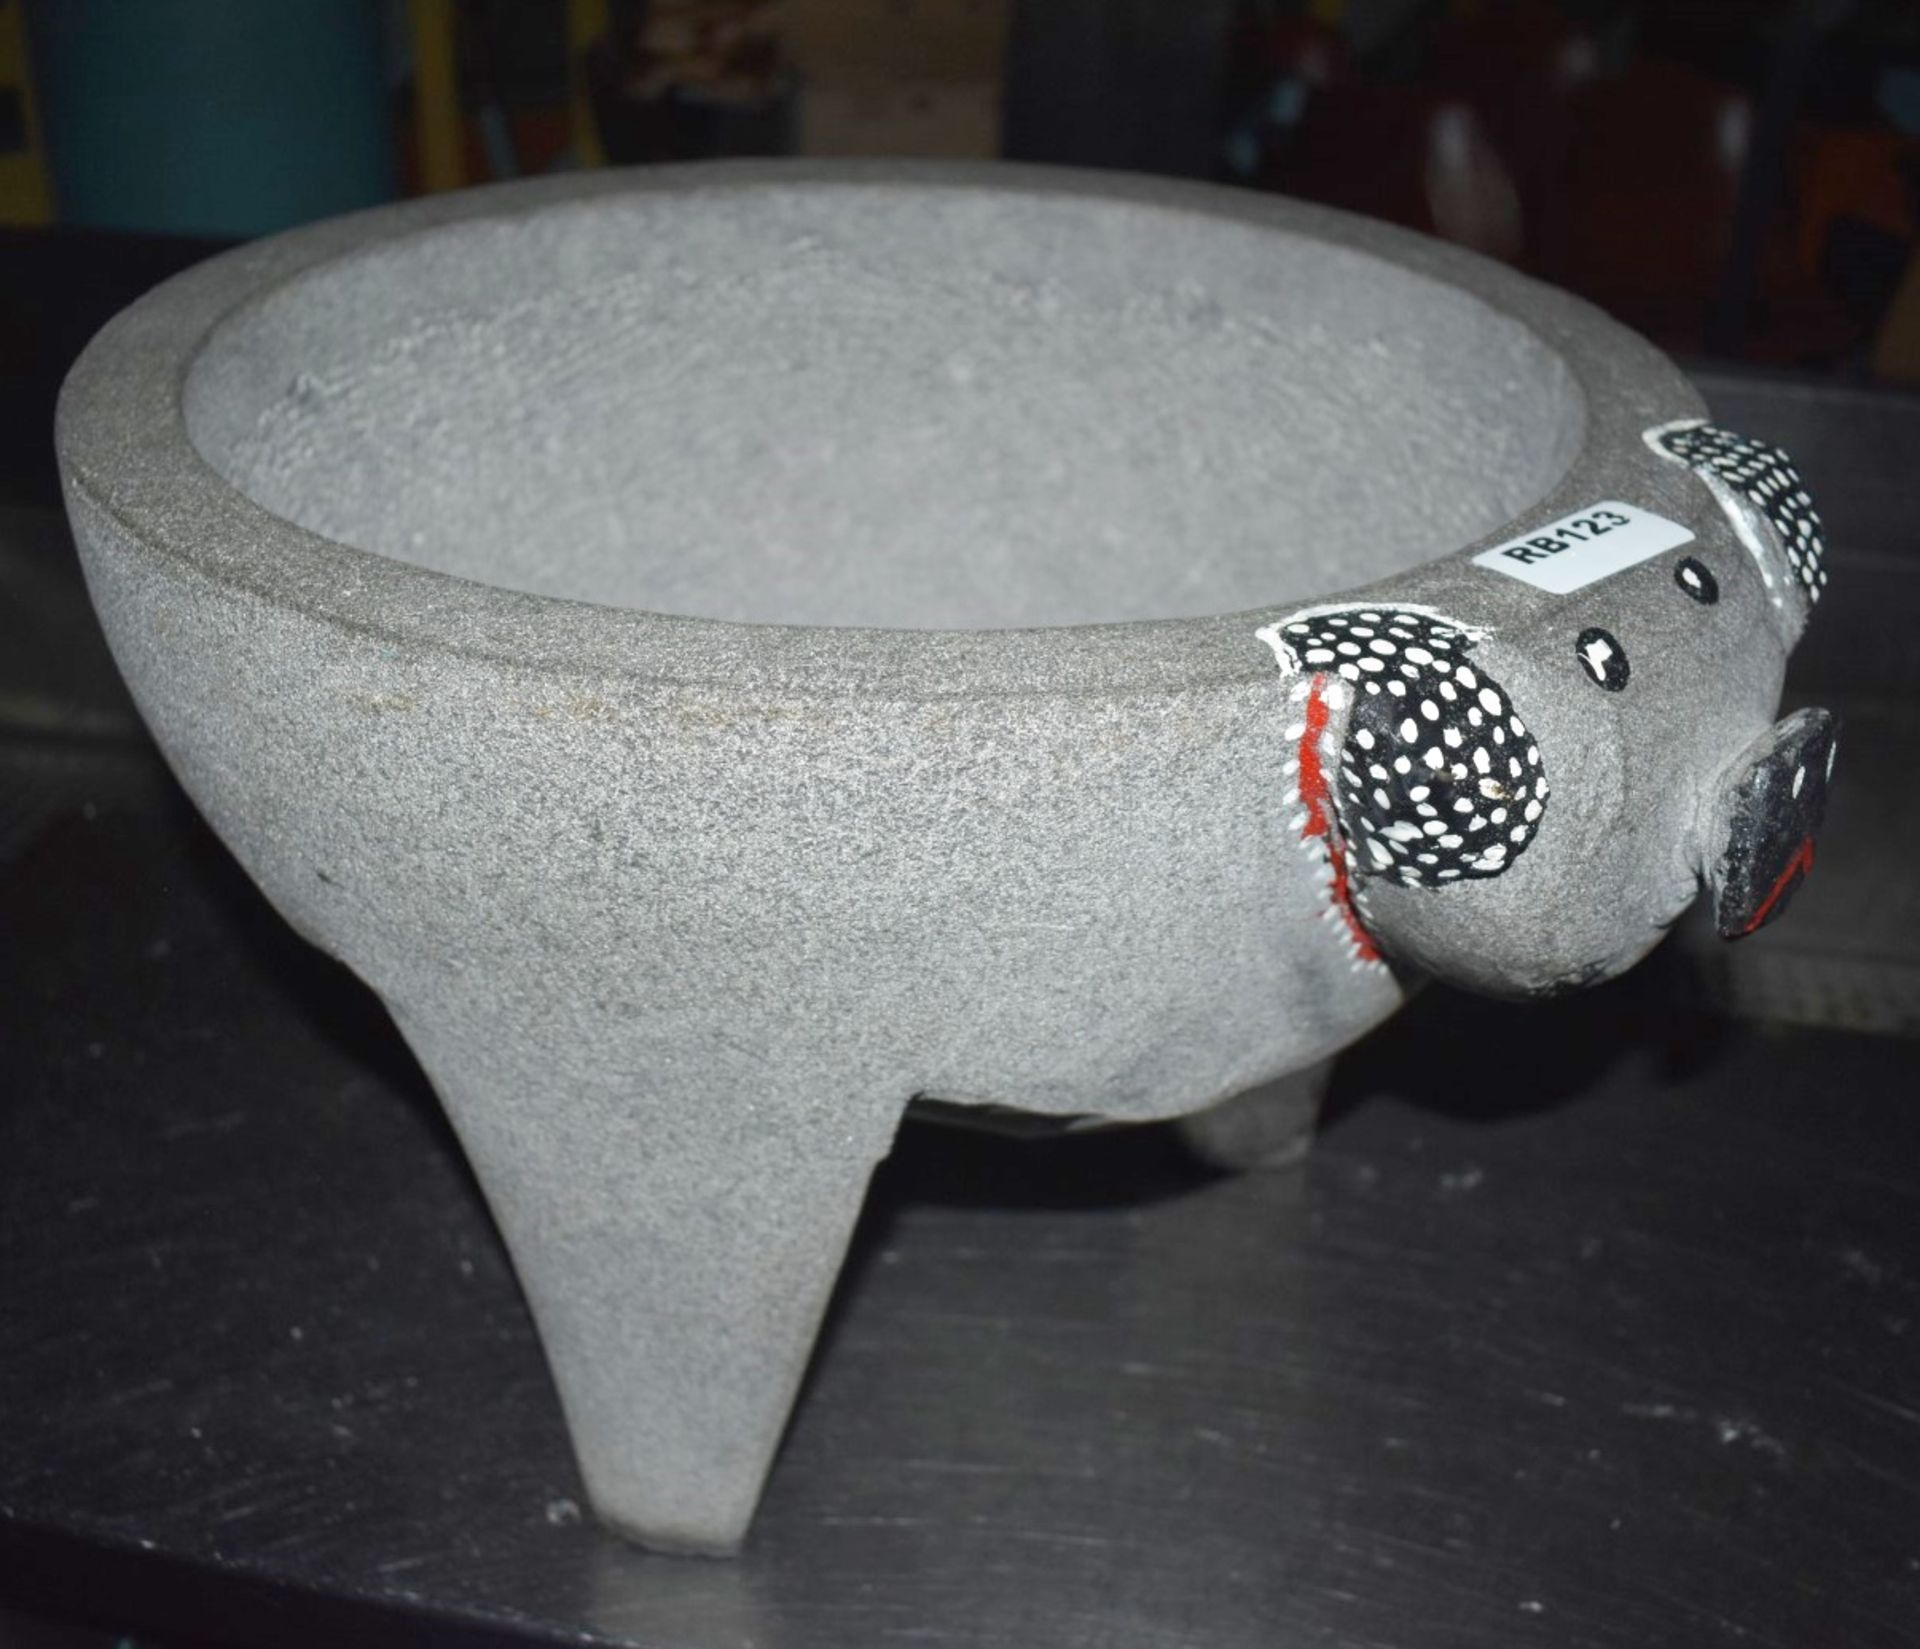 1 x Stone Pig Style Dahaca Folk Art Griding Bowl - Size H30 x W40 cms - Ref: RB123 - CL558 - - Image 4 of 4